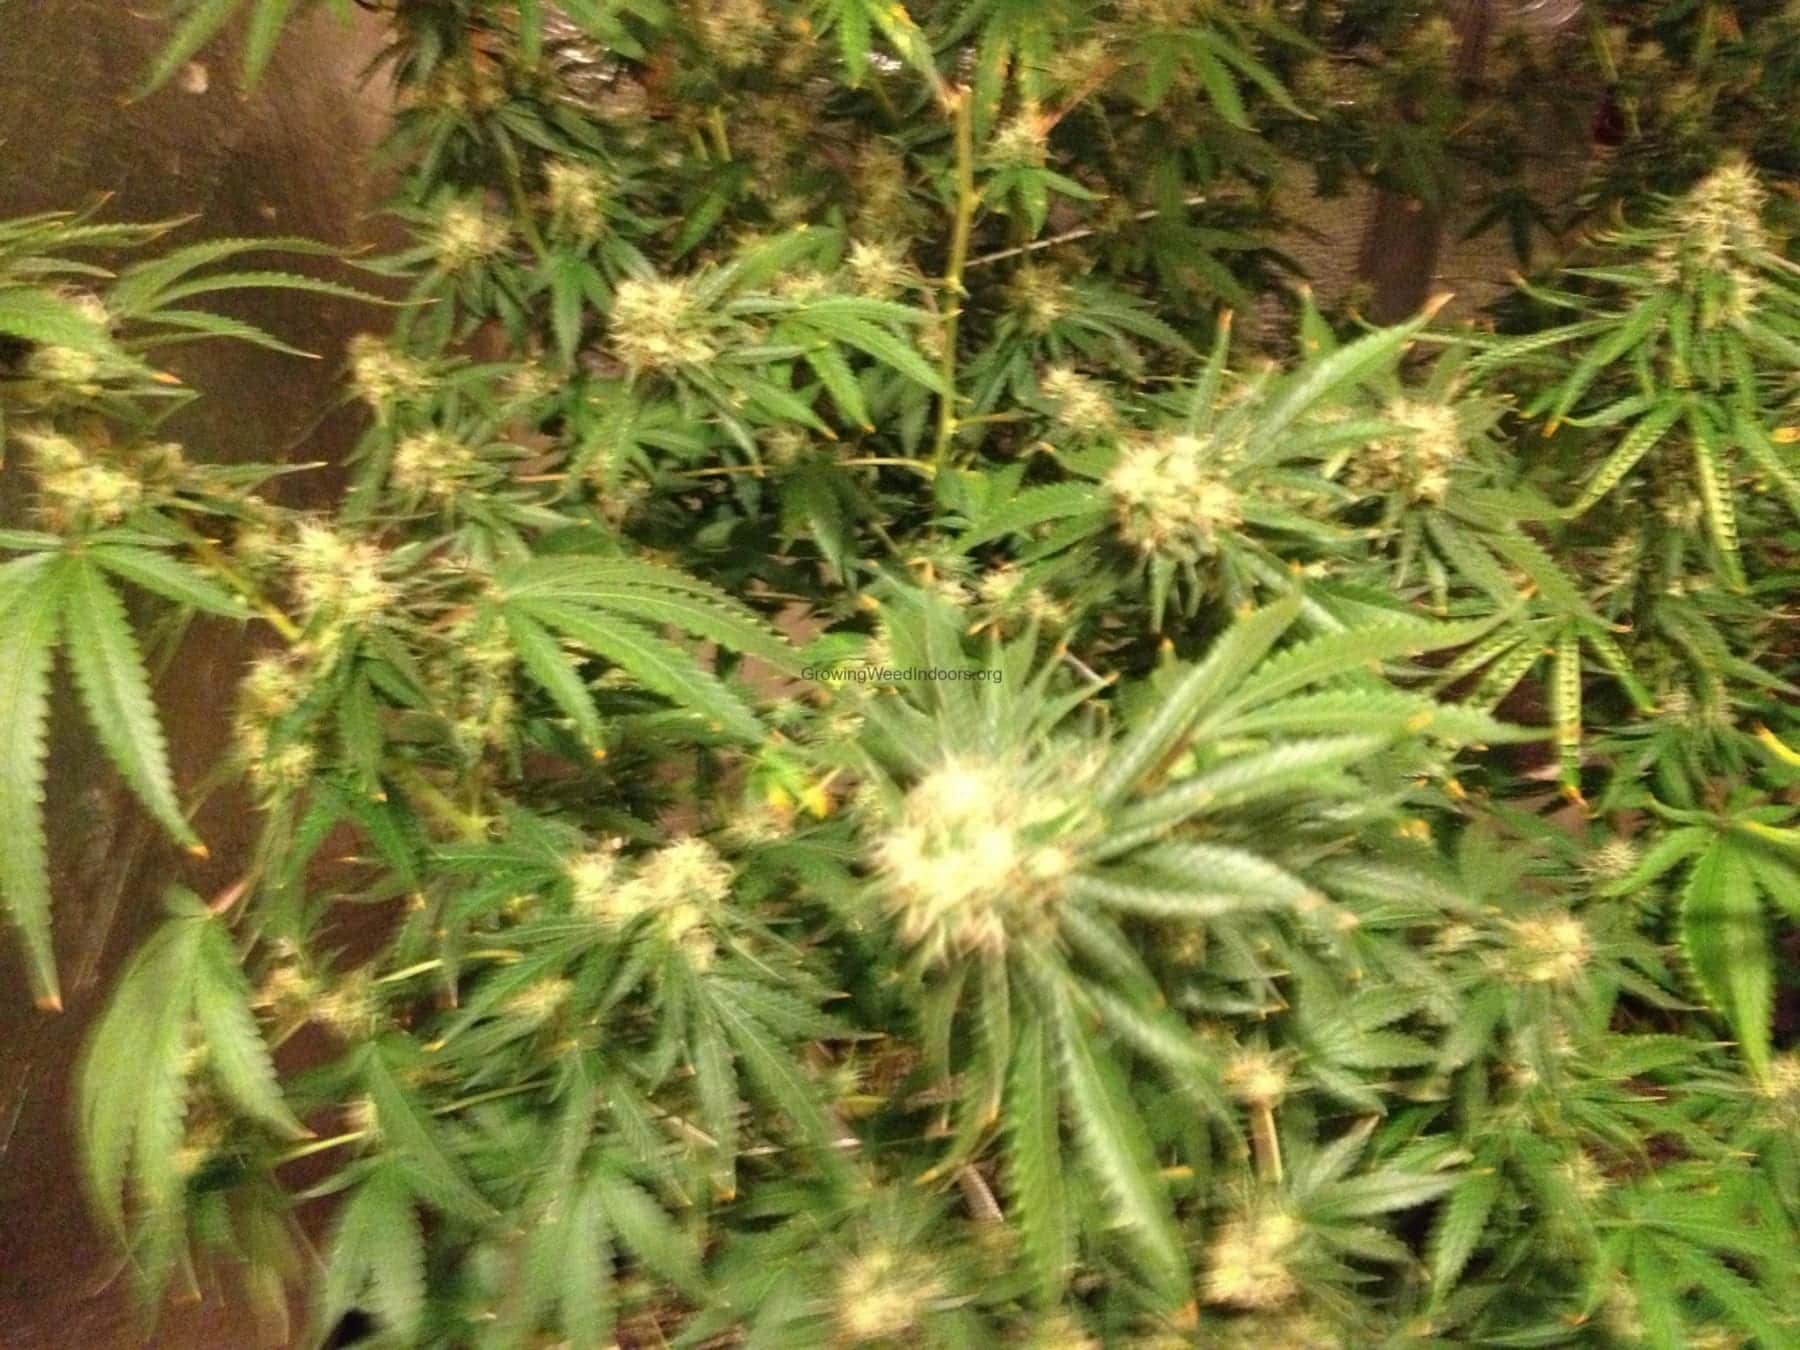 Flowering marijuana plants